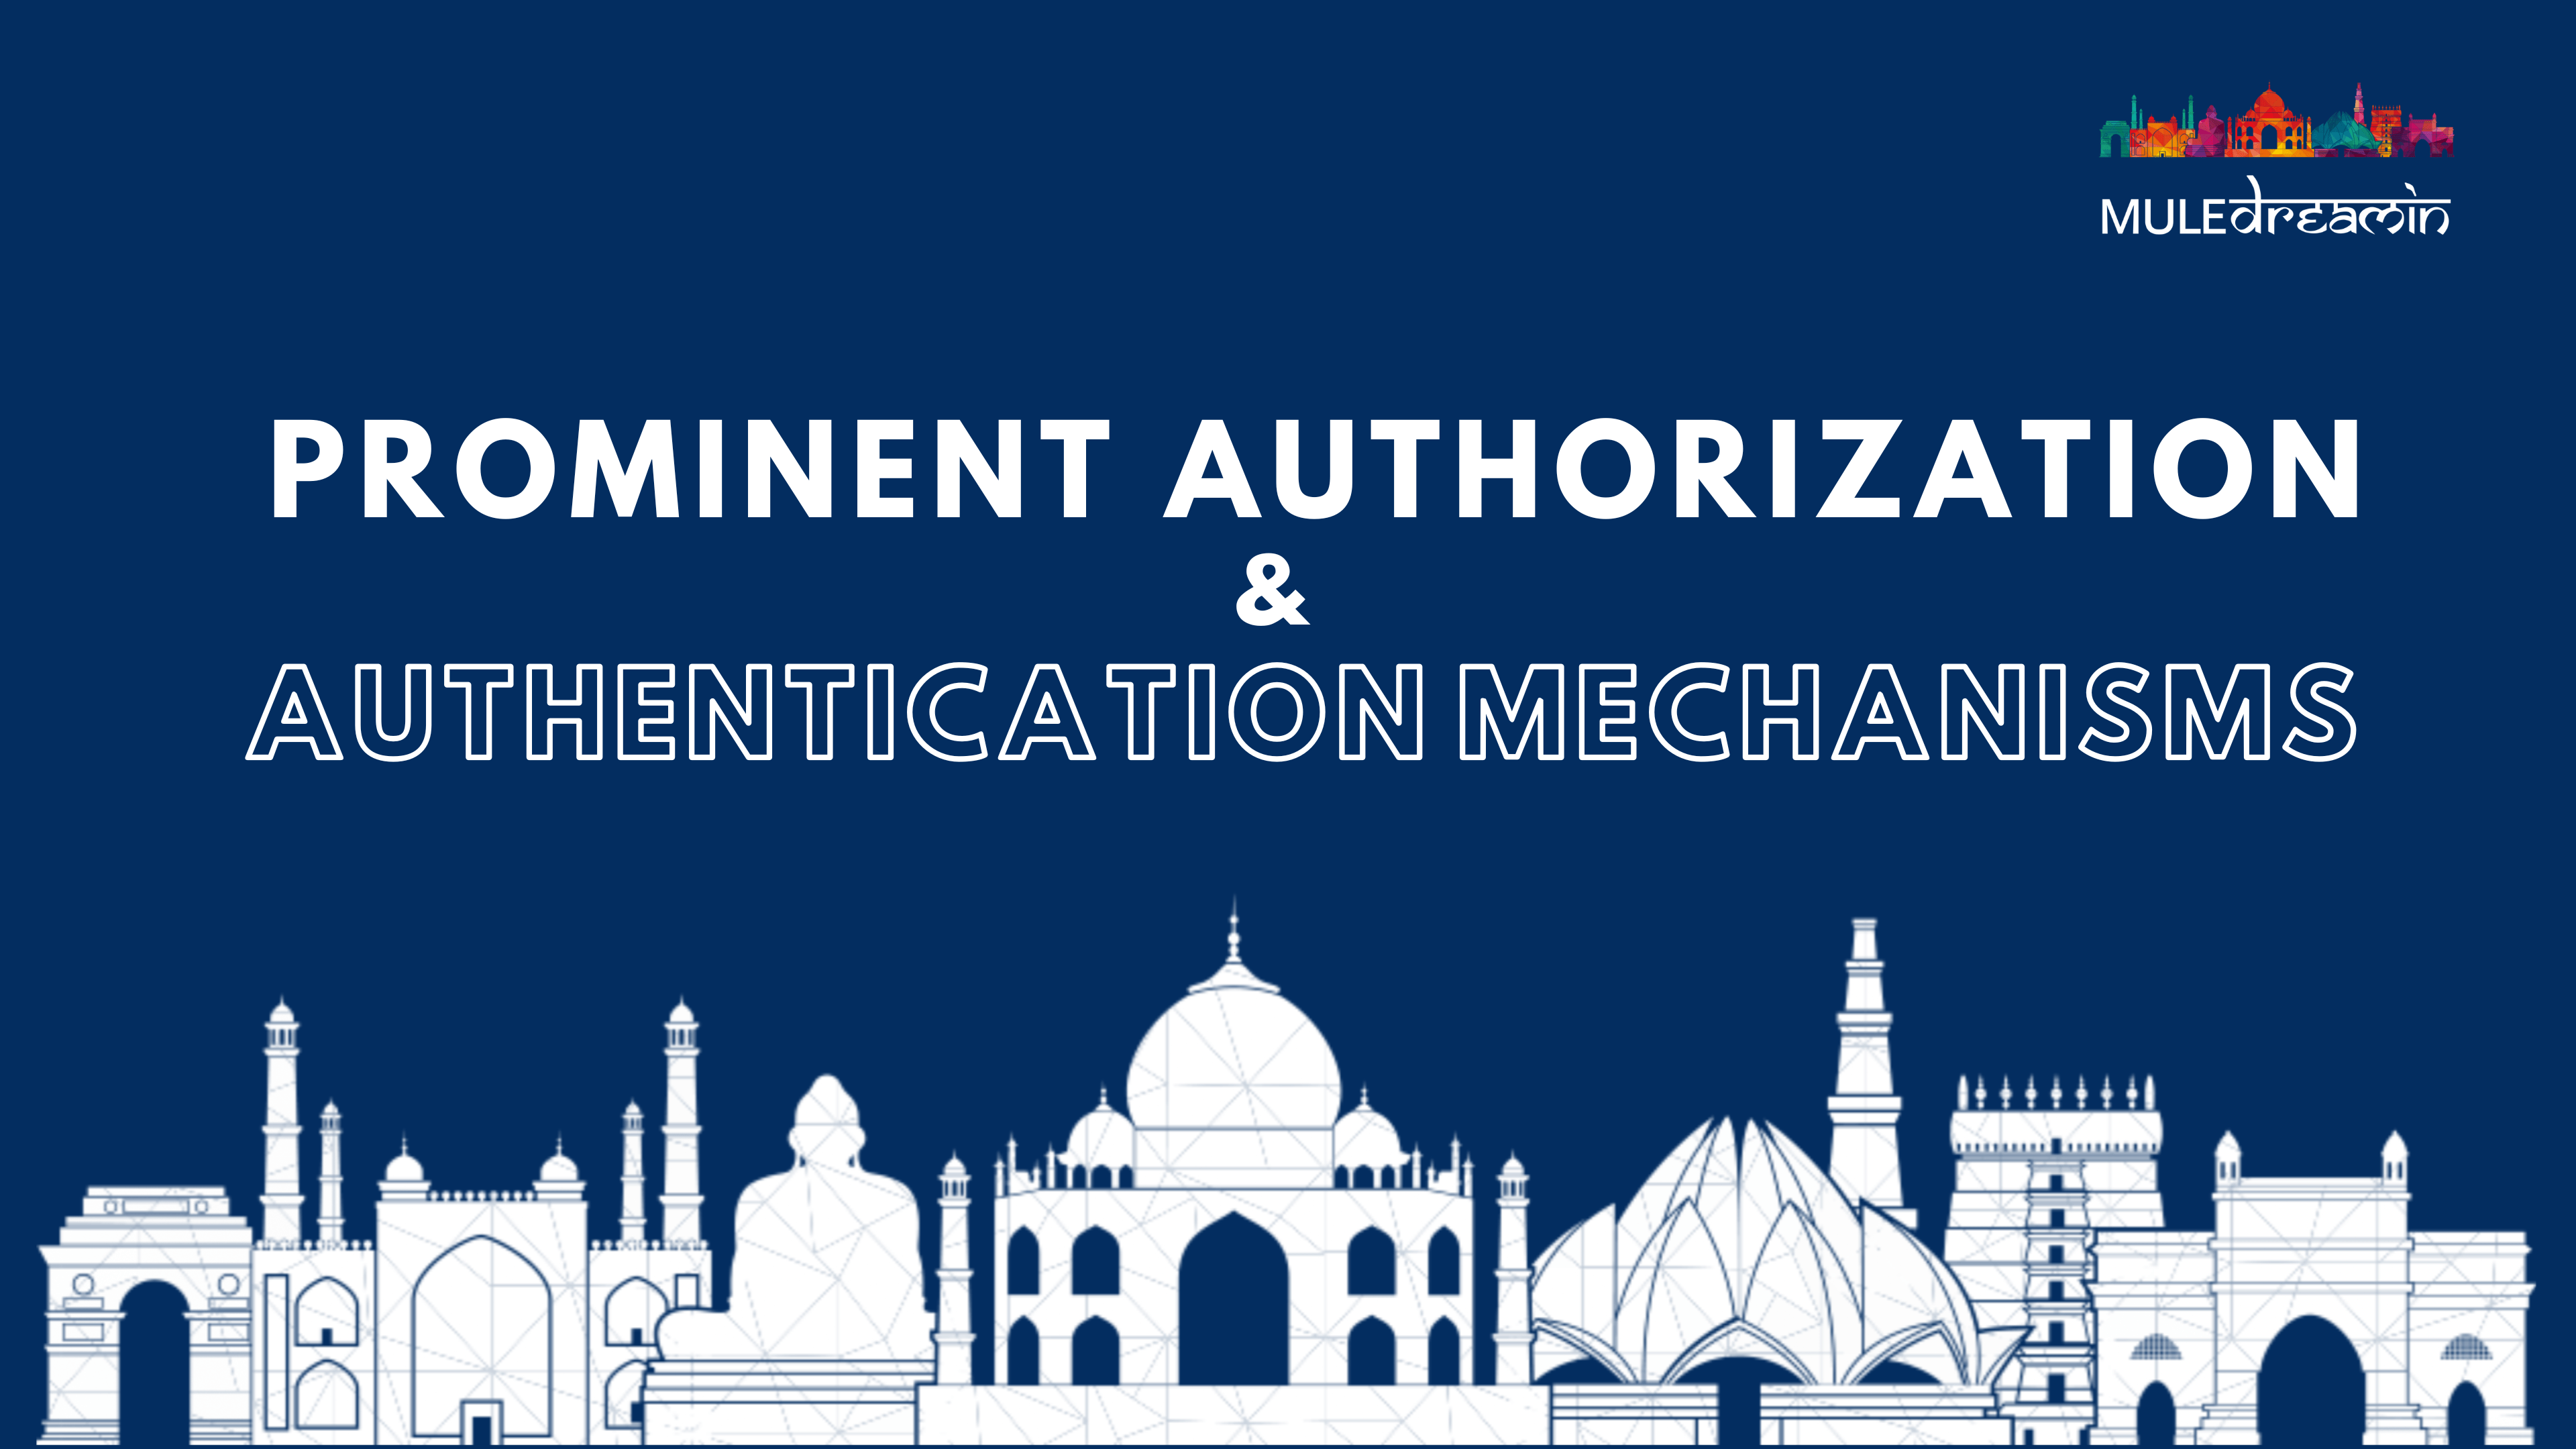 Authorization & authentication Mechanisms